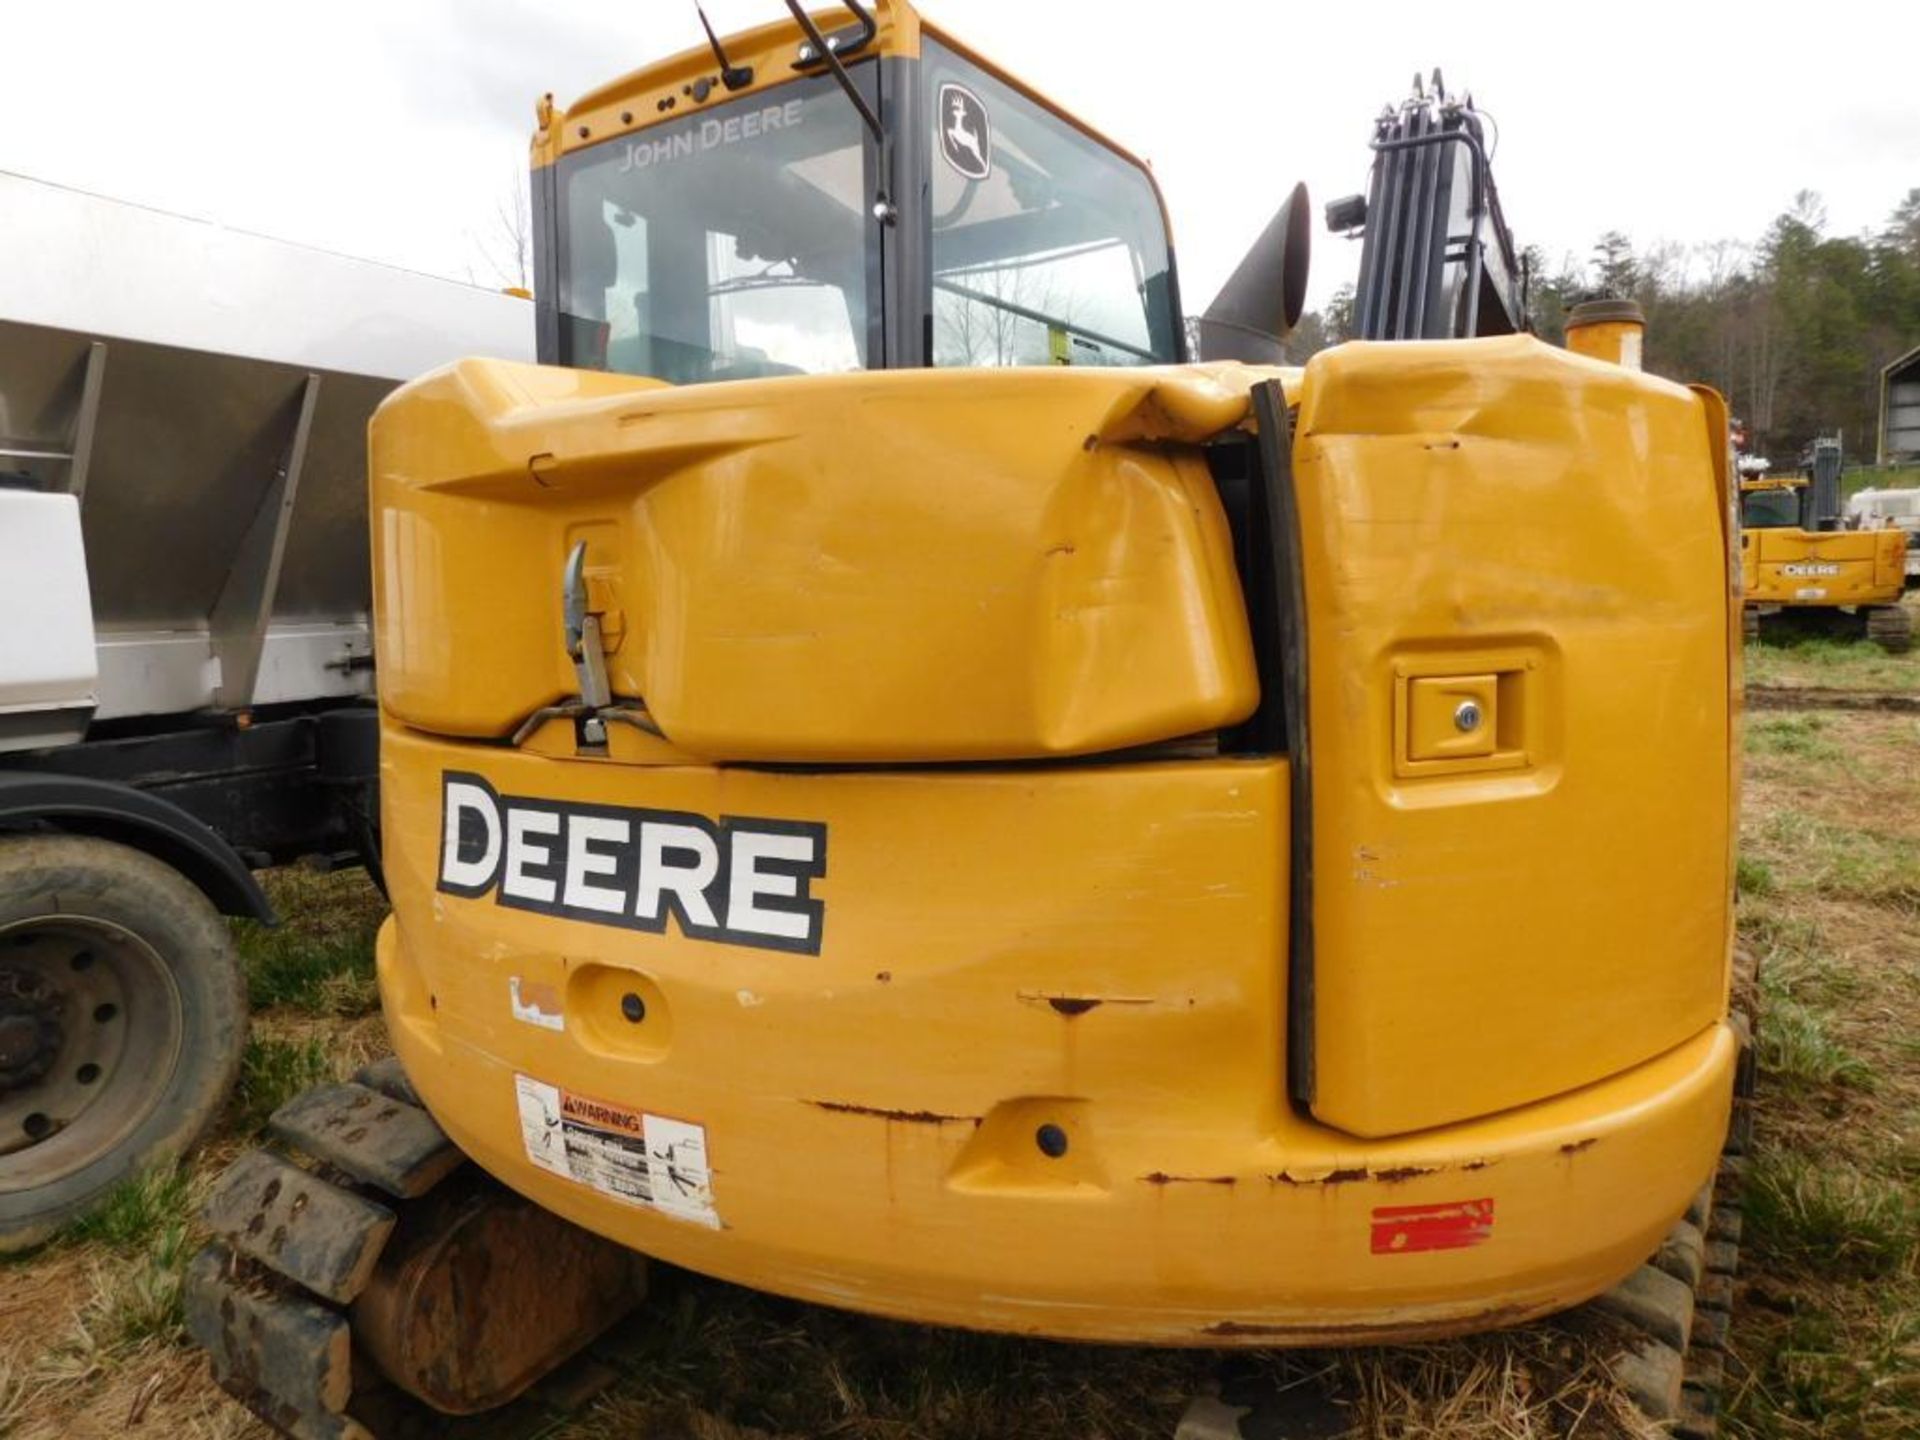 2019 John Deere Mini Excavator, Model 85G, S/N 1FF085GXHJJ020517, 1,556 Hours Indicated, 22" Bucket - Image 2 of 12